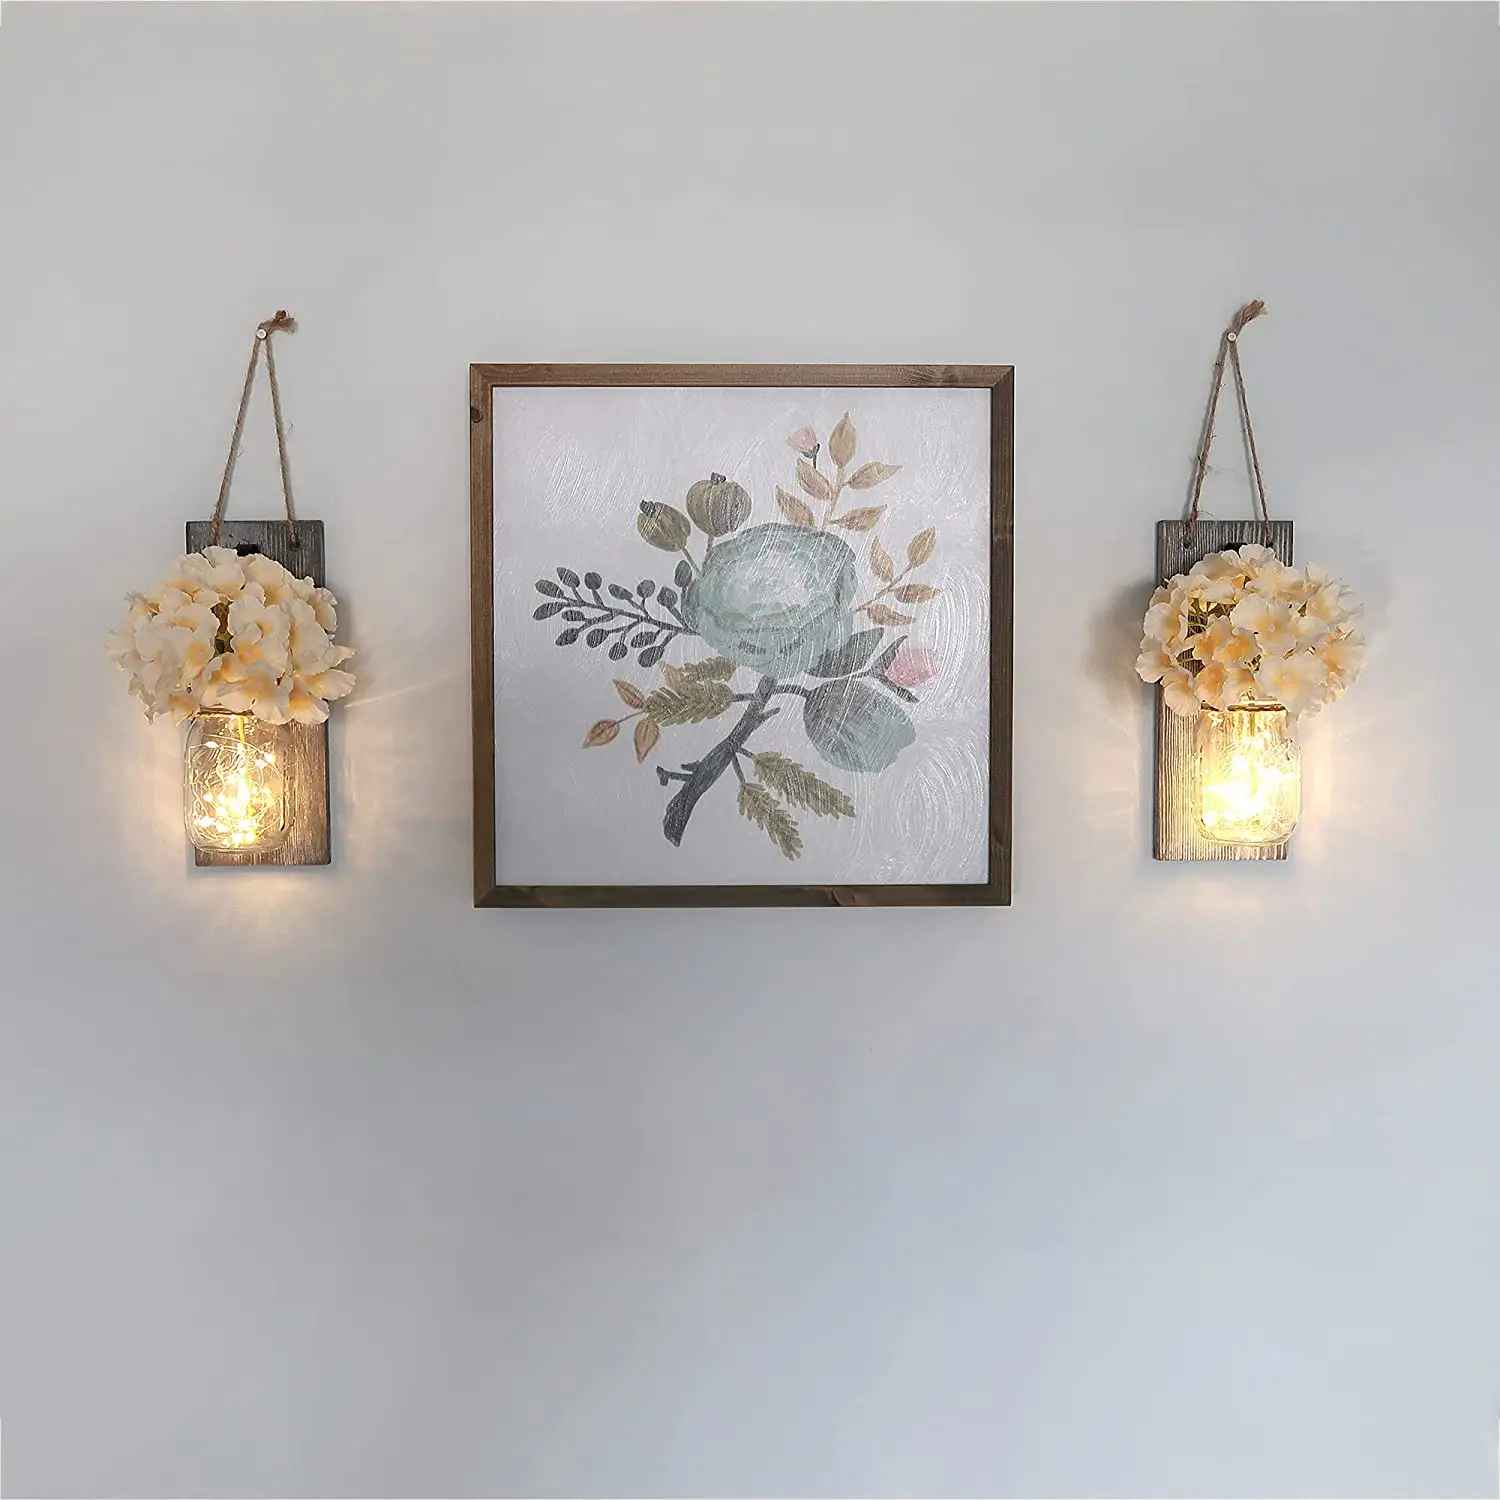 Rustic Wooden Wall Art Hanging Decor With LED String Lights Flowers Modern Home Living Room Bedroom Mason Jar Sconces Decor